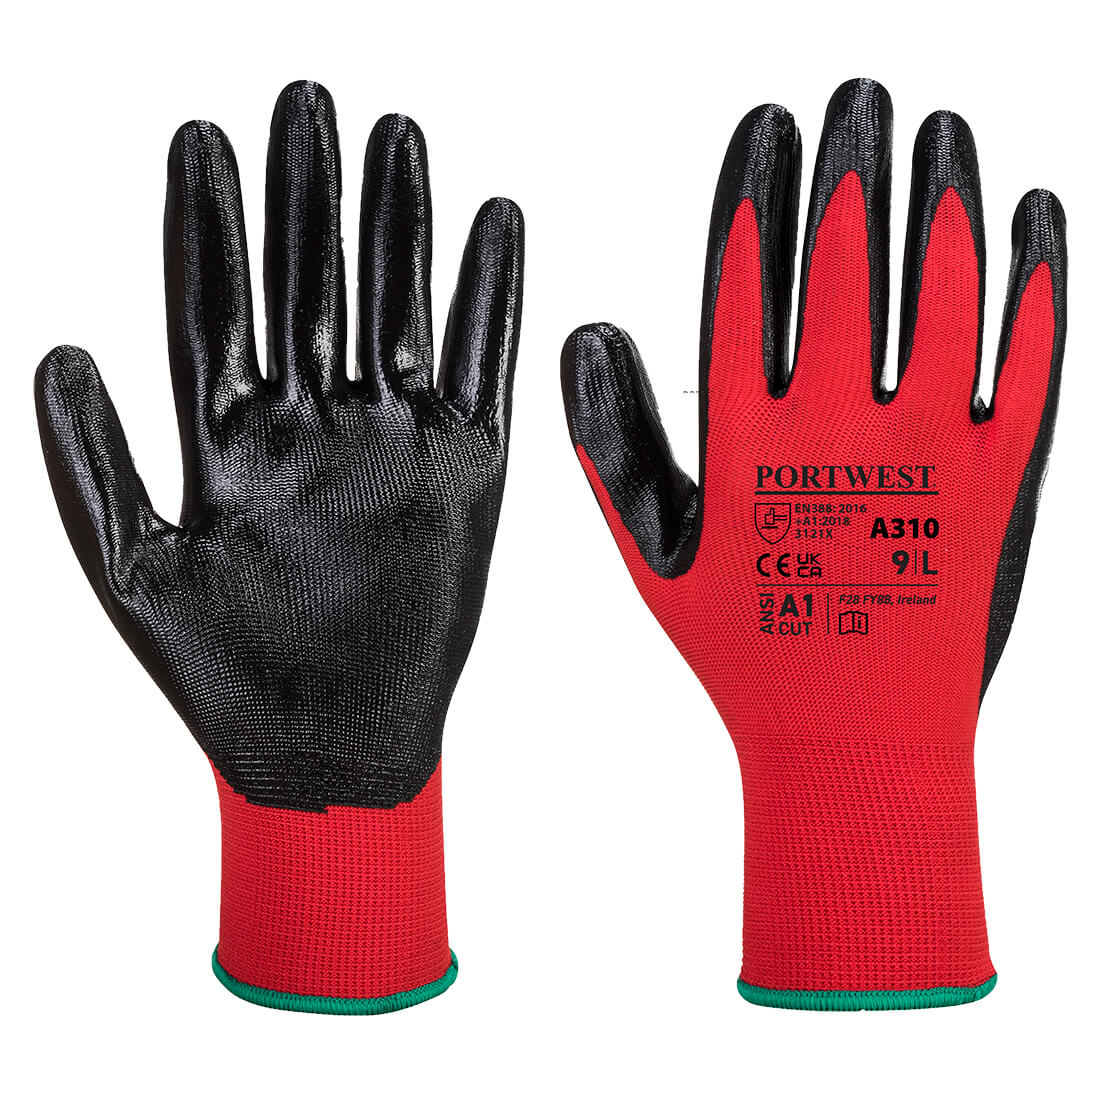 Flexo Grip Nitrile Glove - Red/Black